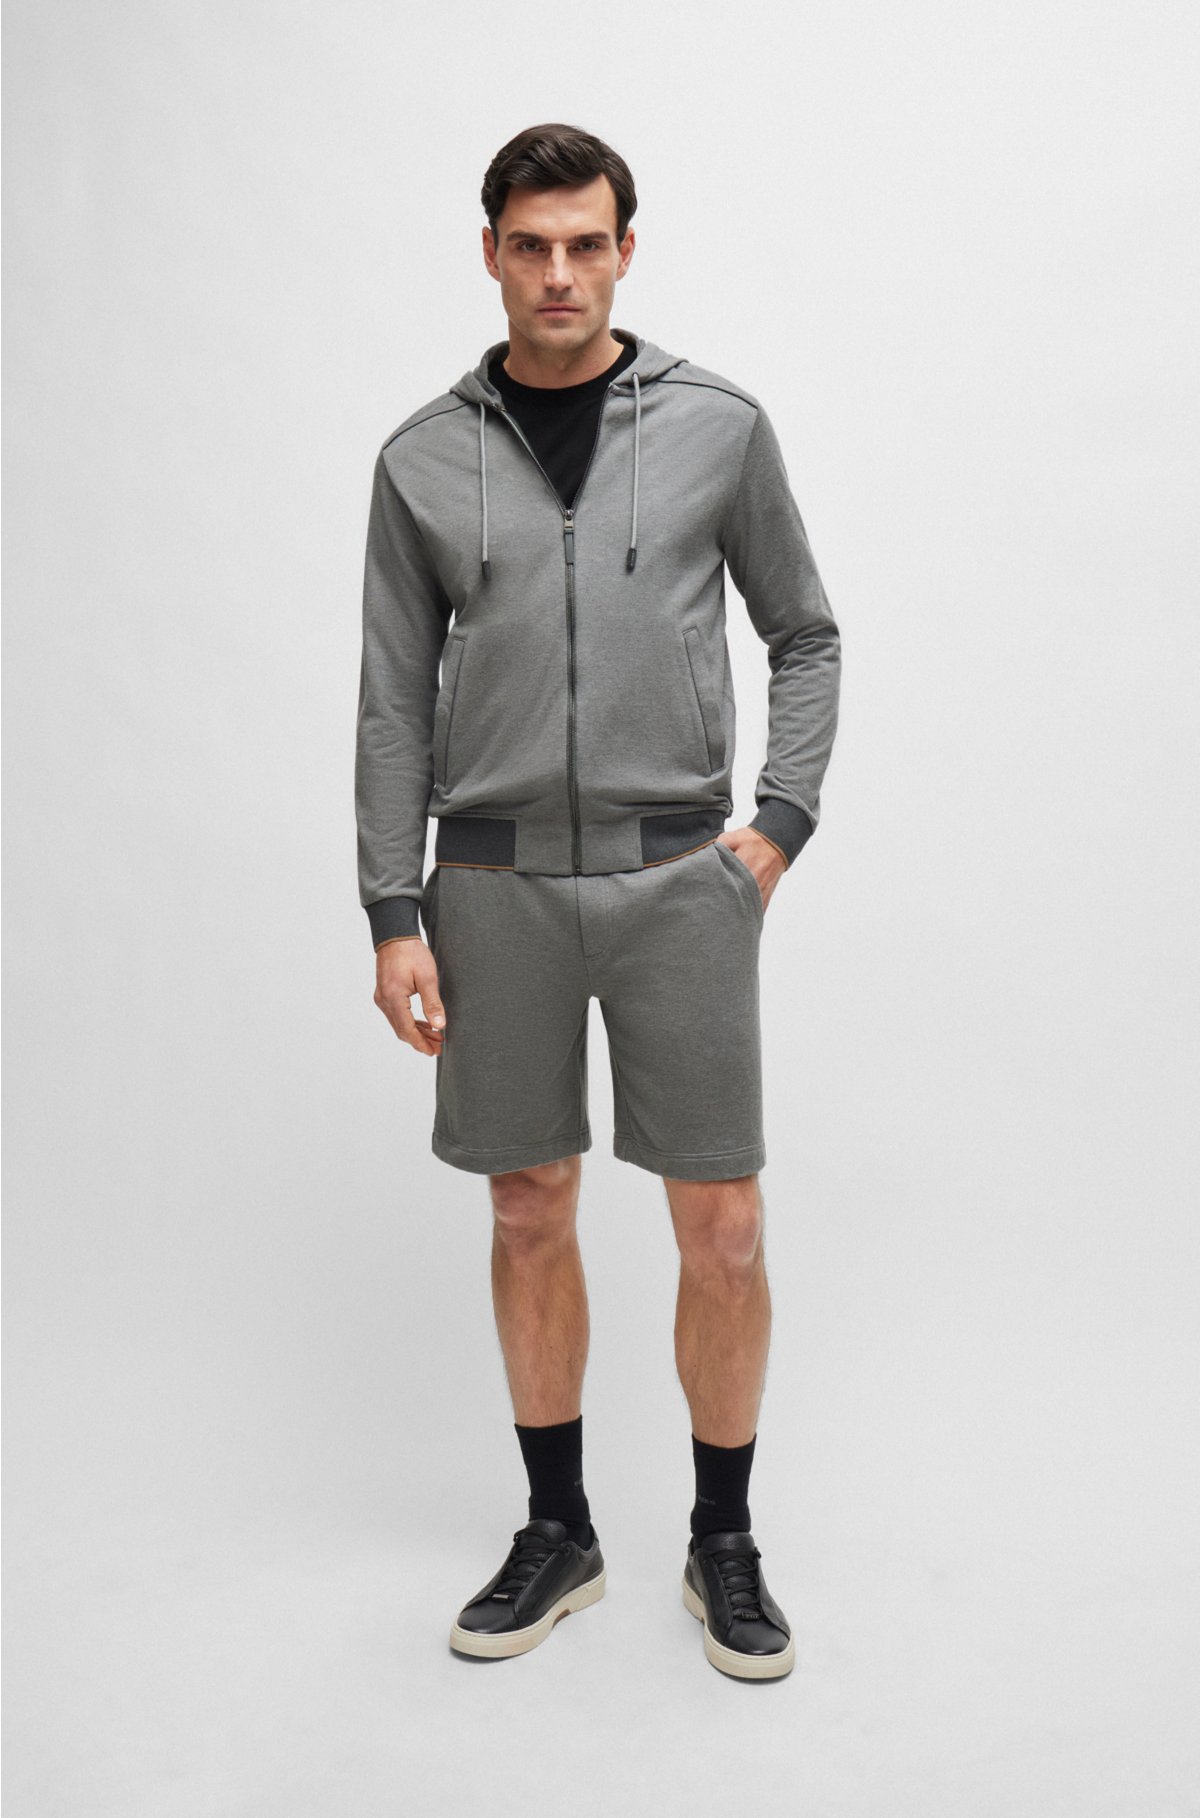 Double-faced zip-up hoodie in cotton, Grey